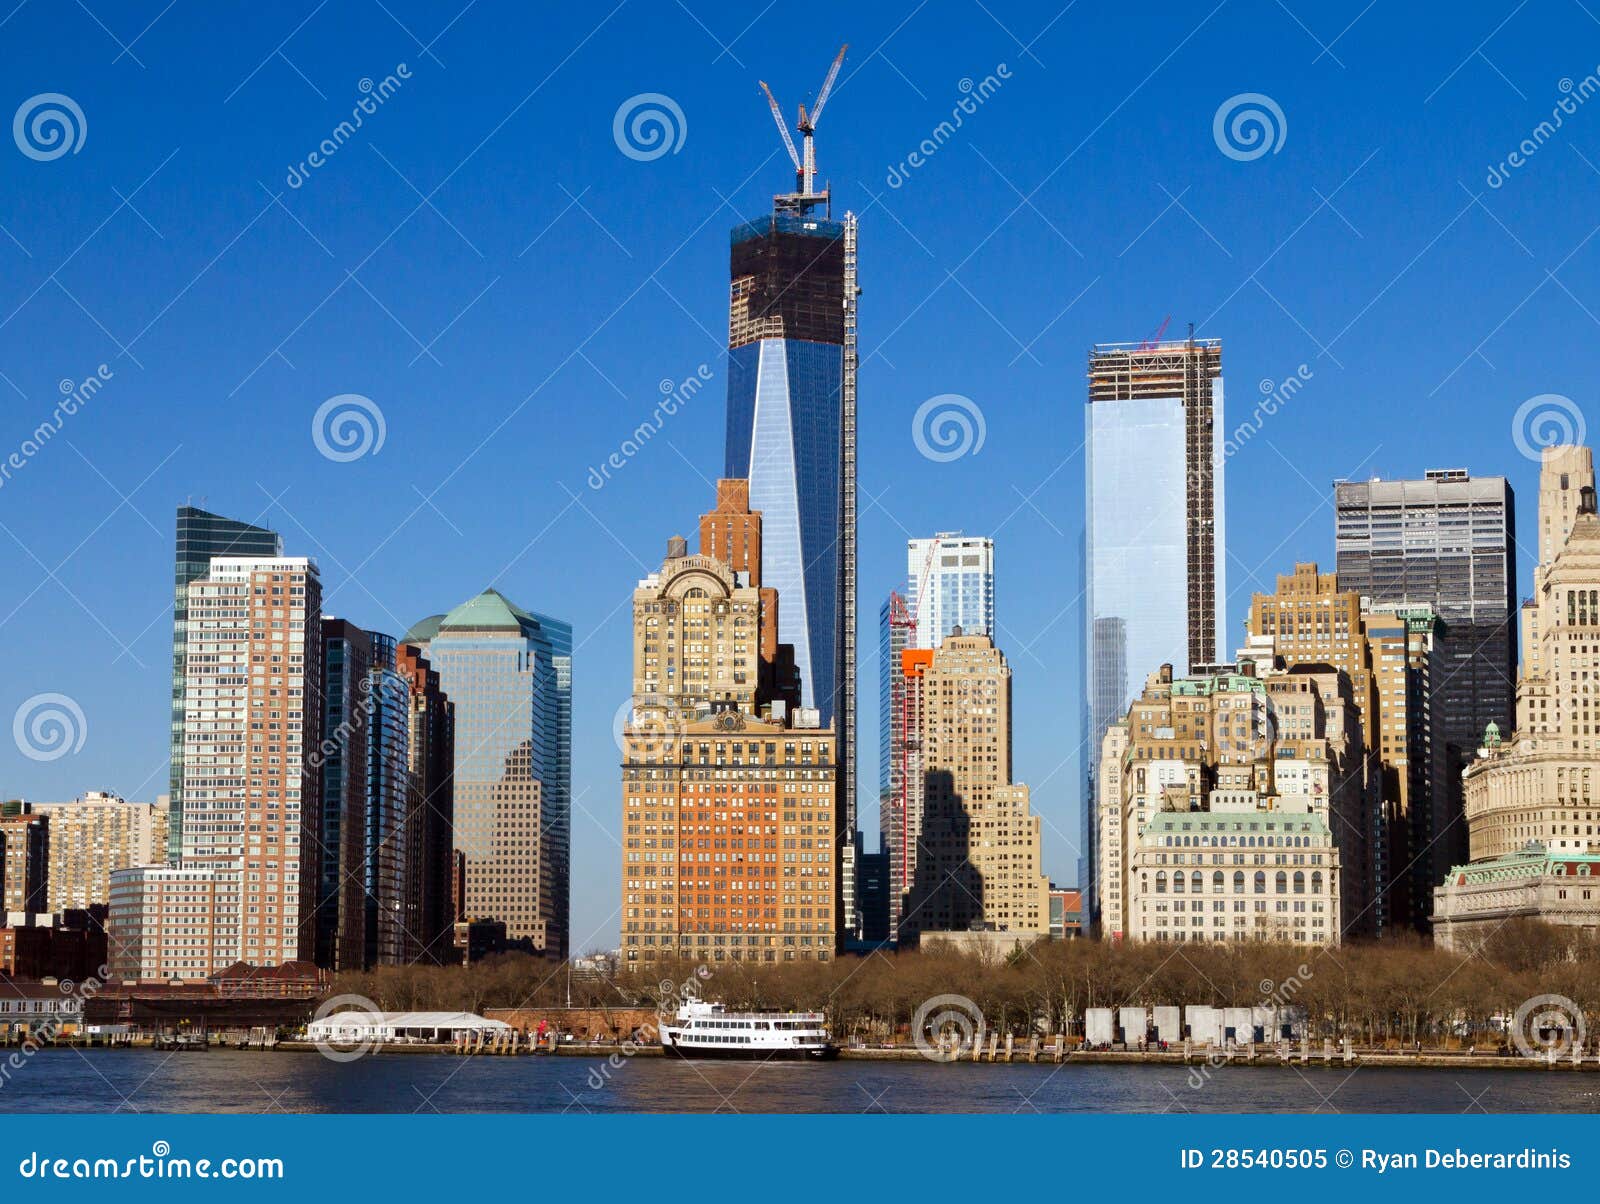 manhattan skyline in new york city